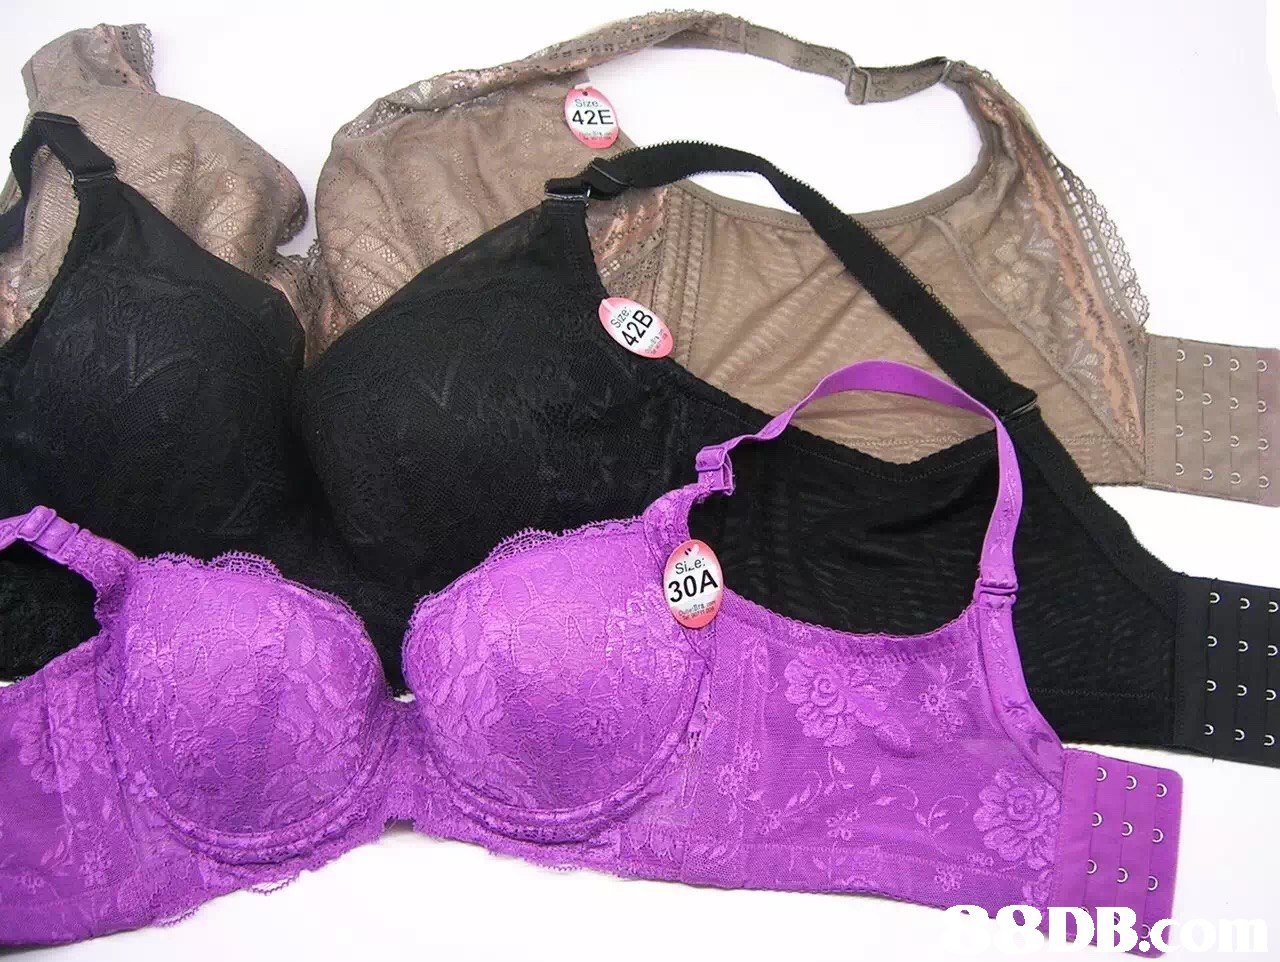 42E 30A  Clothing,Purple,Undergarment,Pink,Violet